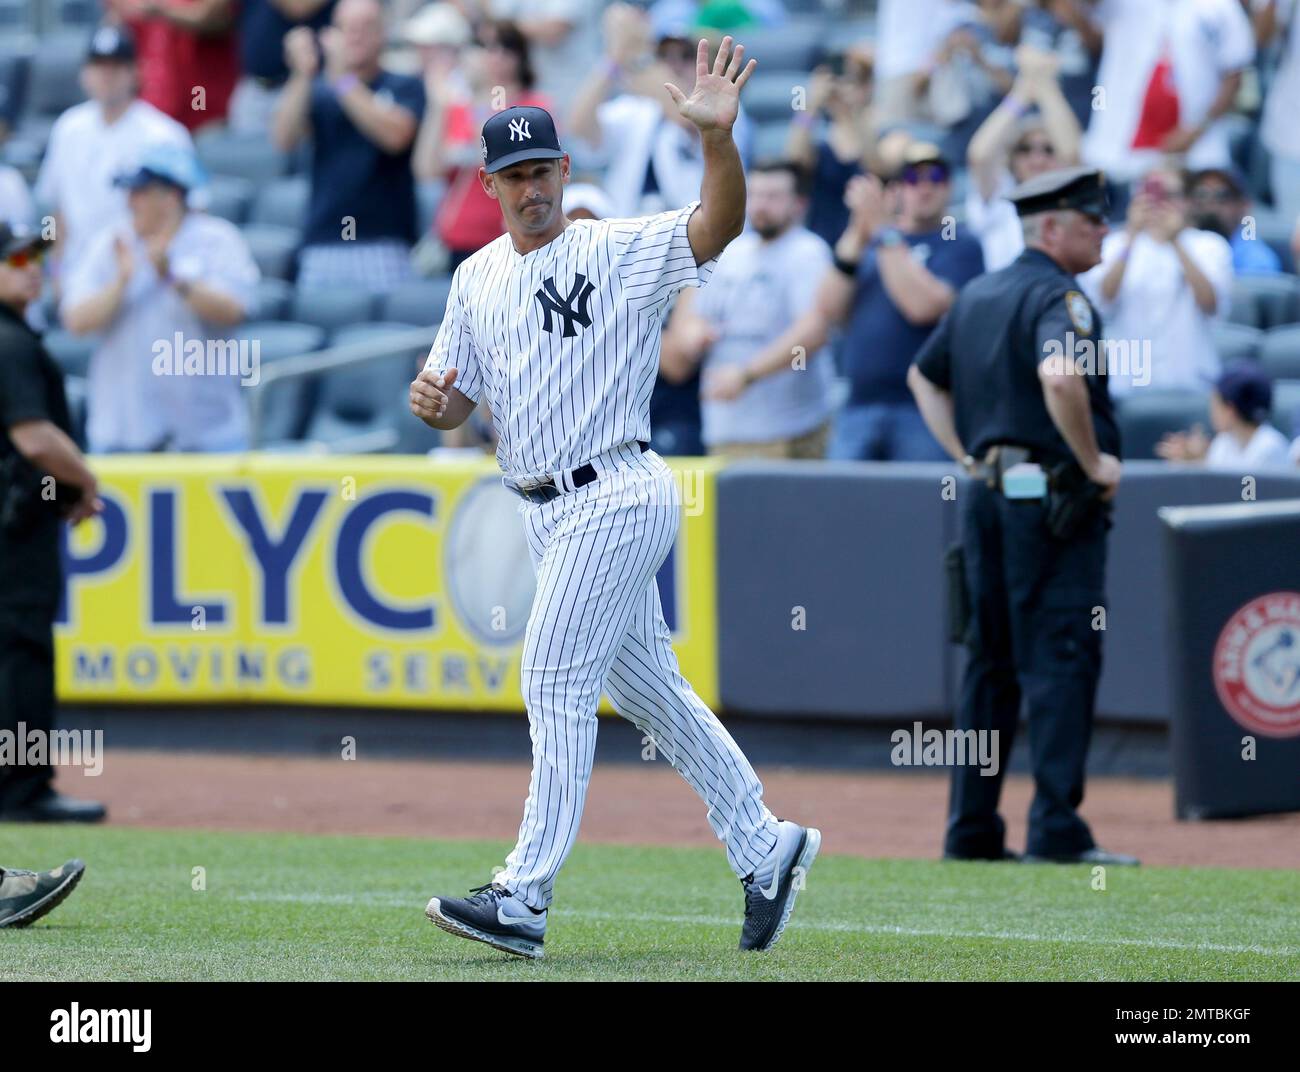 Jorge Posada makes debut at Yankees Old Timers' Day - ABC7 New York